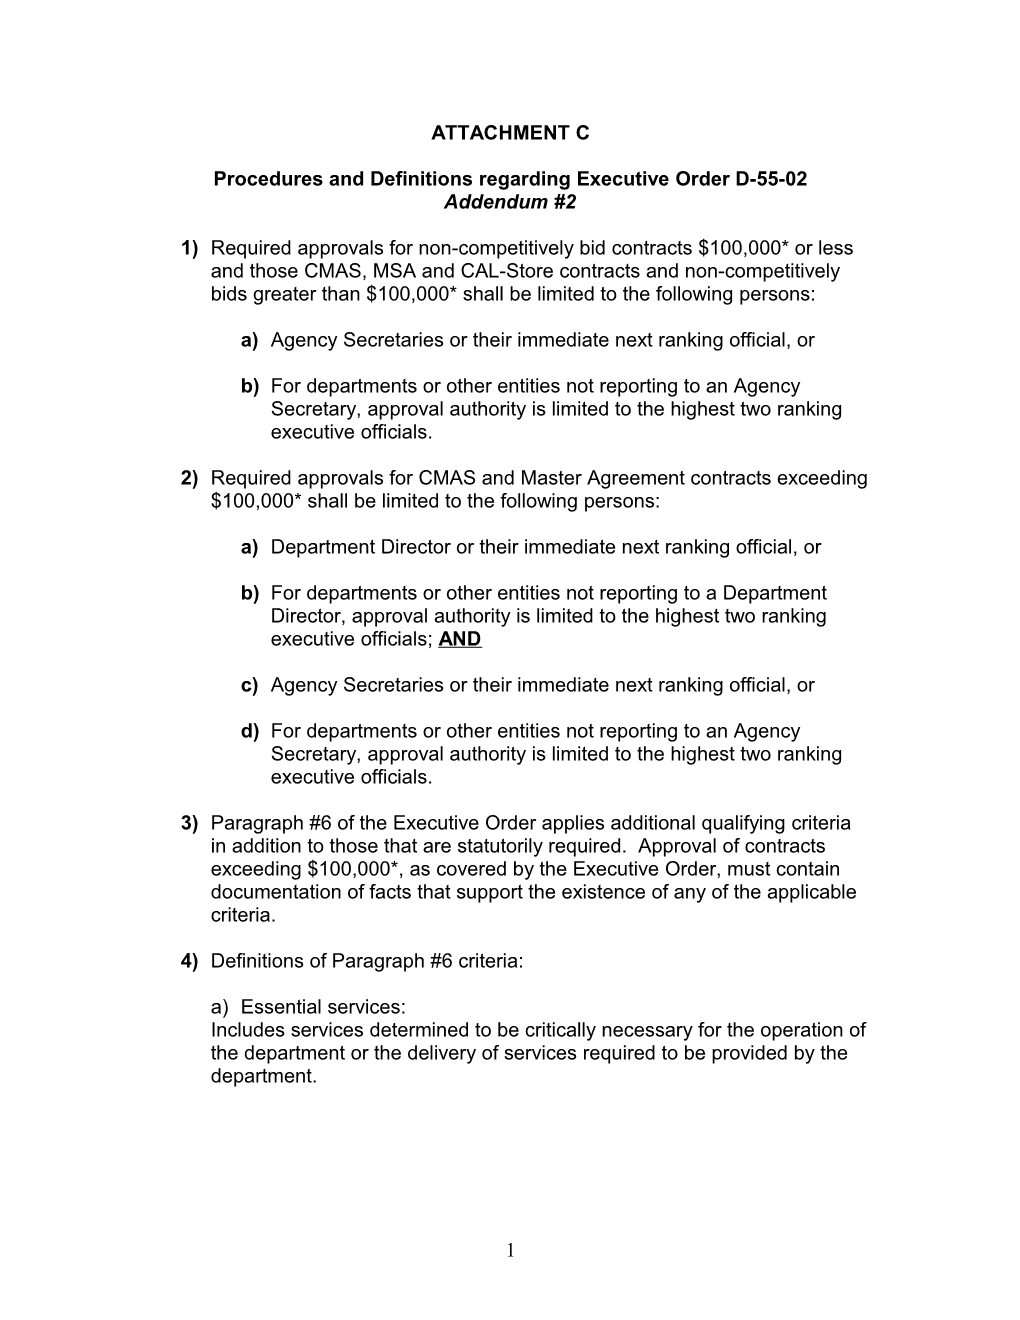 Procedures and Definitions Regarding Executive Order D-55-02